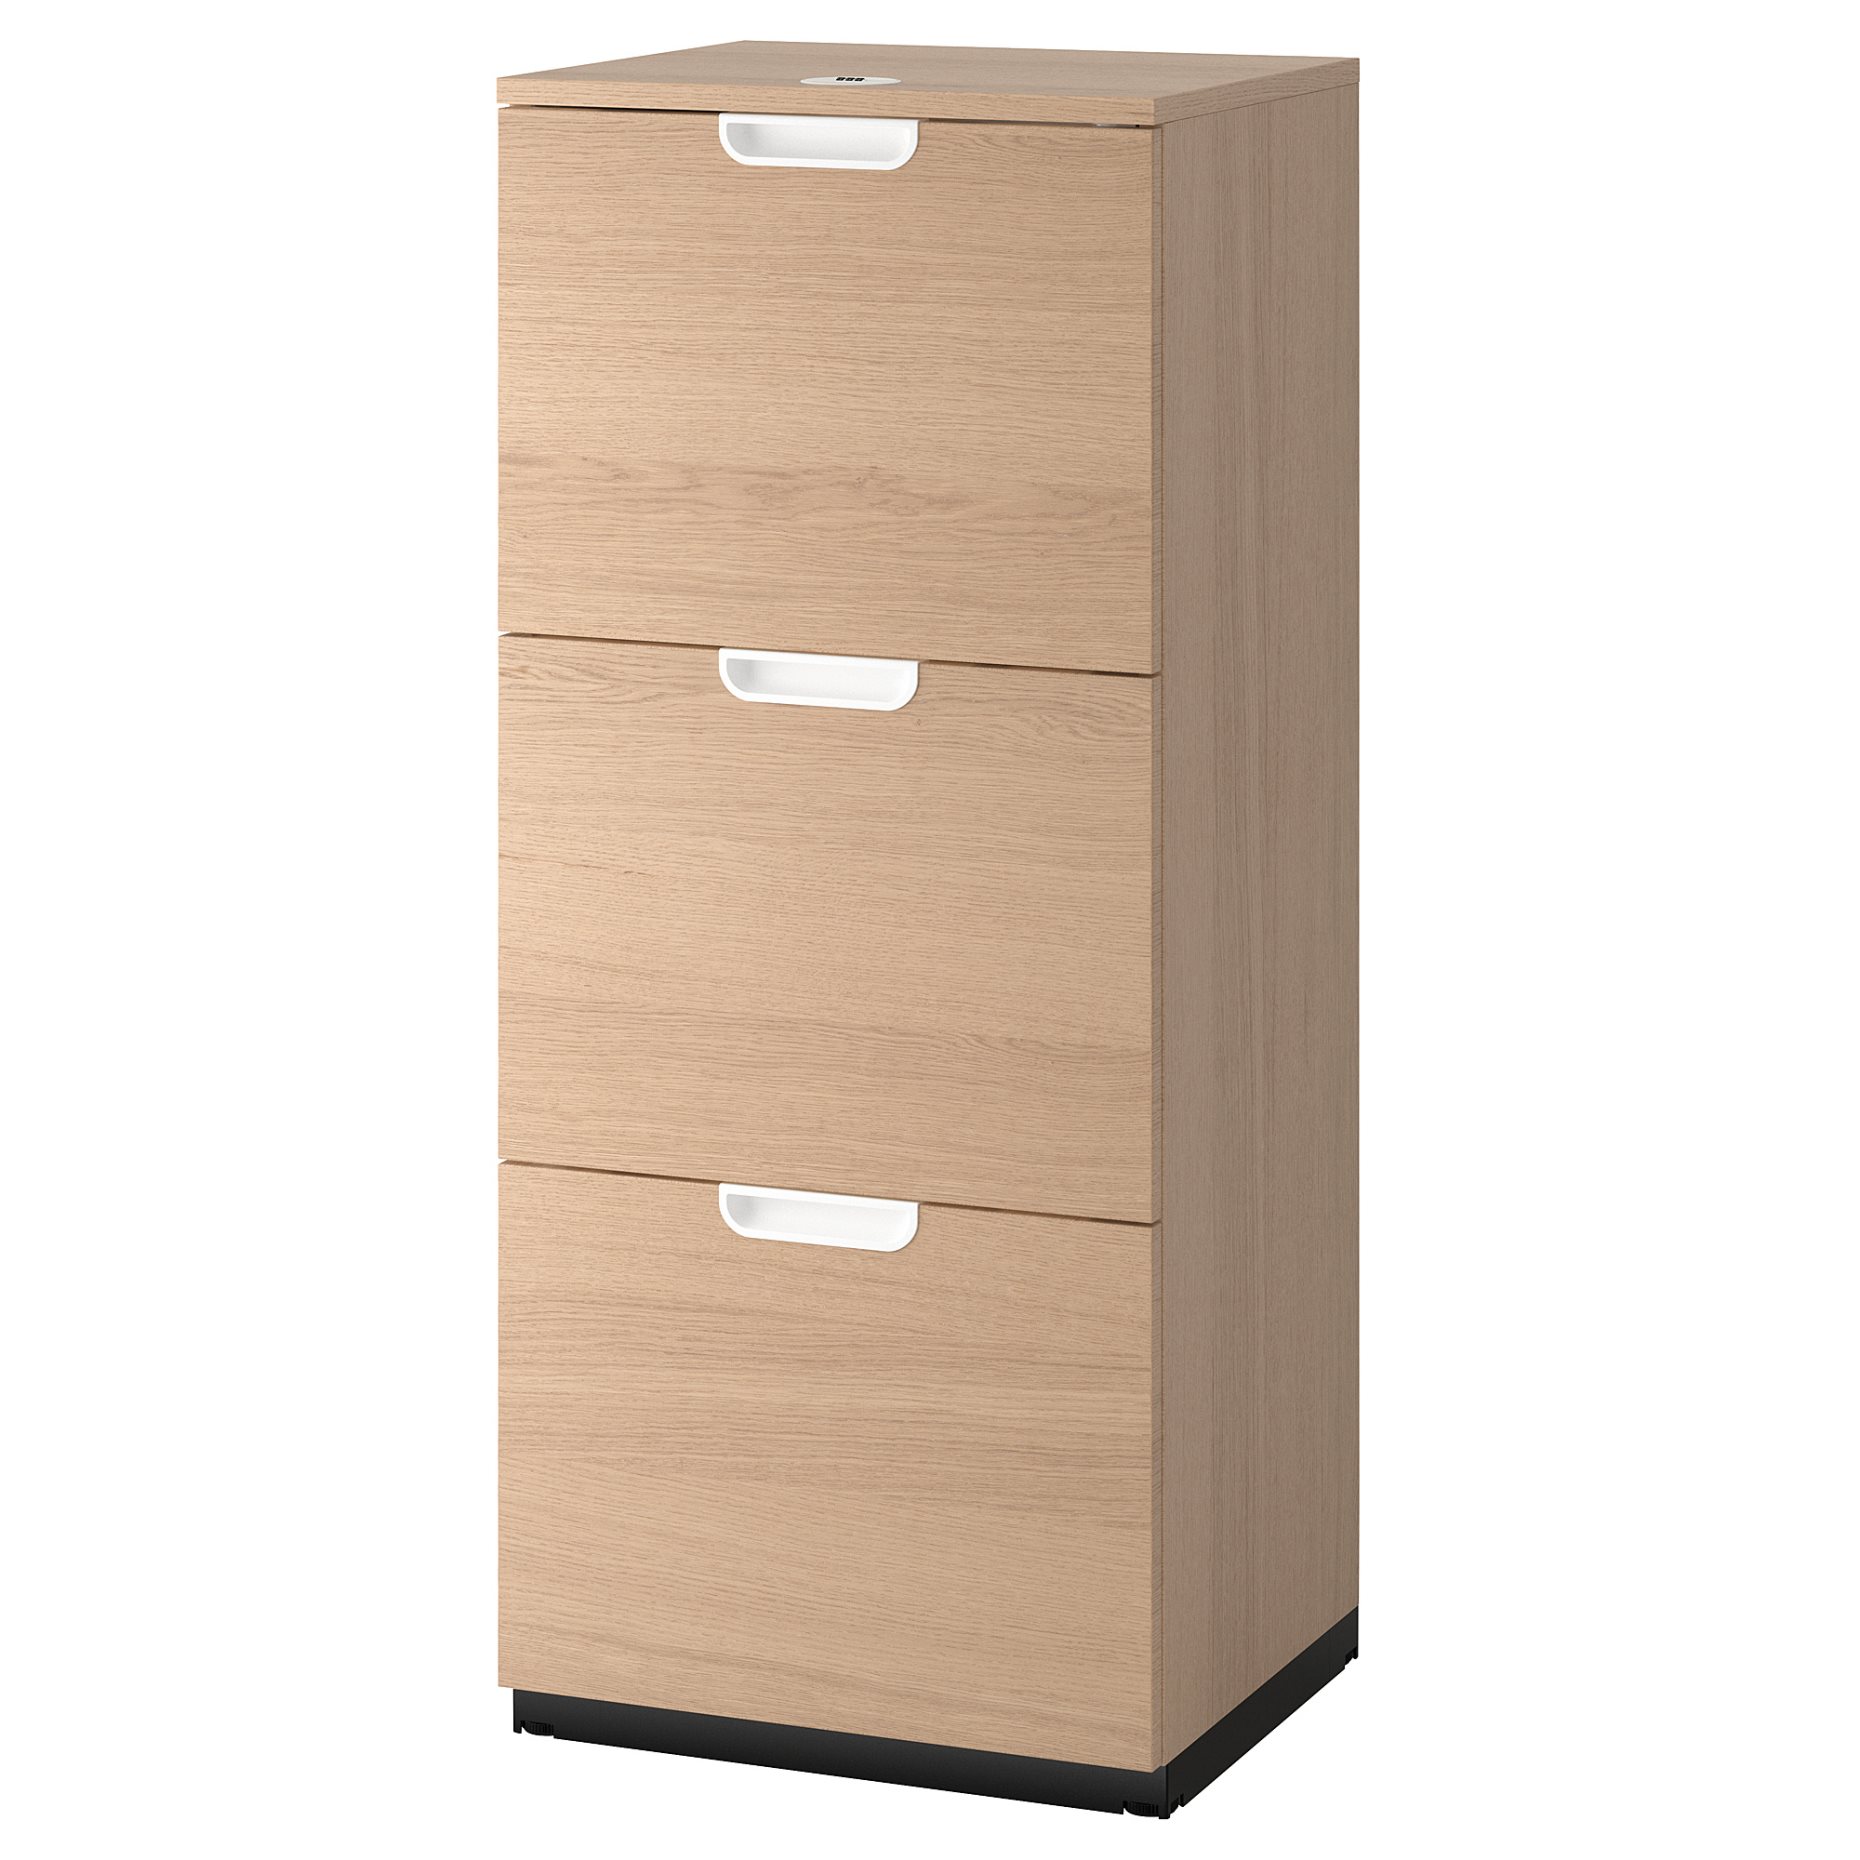 GALANT, file cabinet, 51x120 cm, 303.651.78